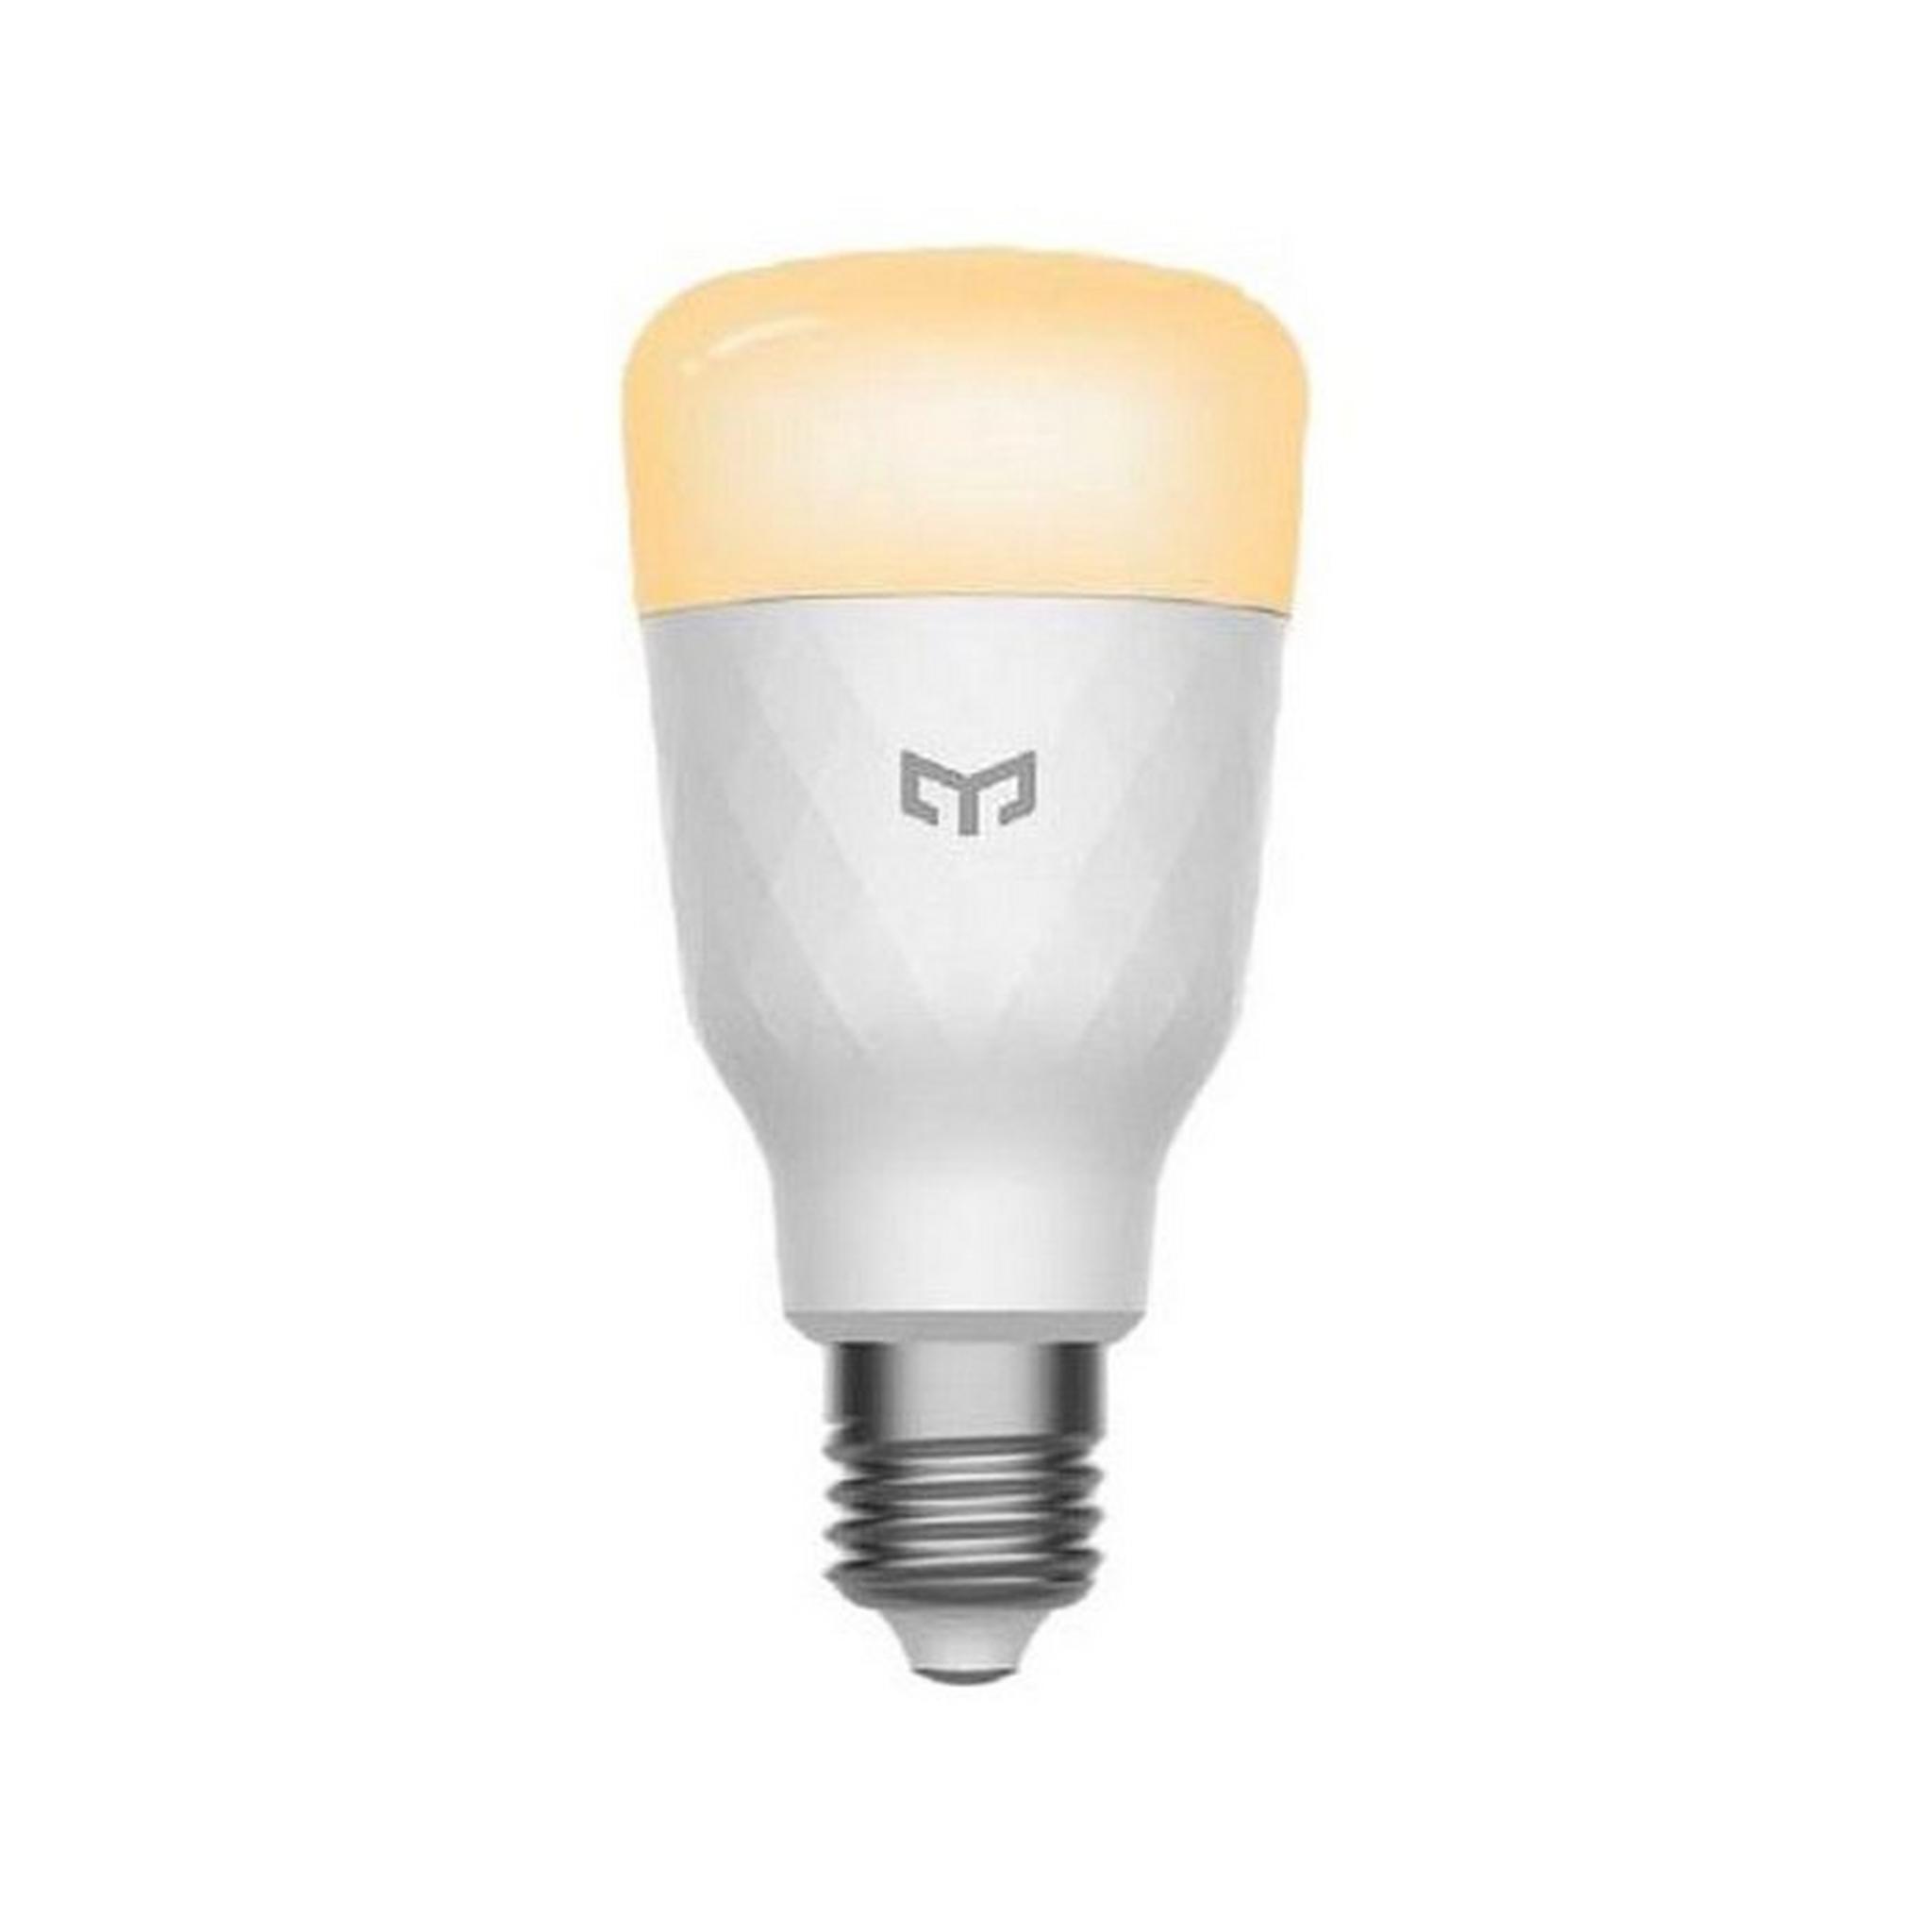 Yeelight Smart Led Bulb W3, YLDP007 - White